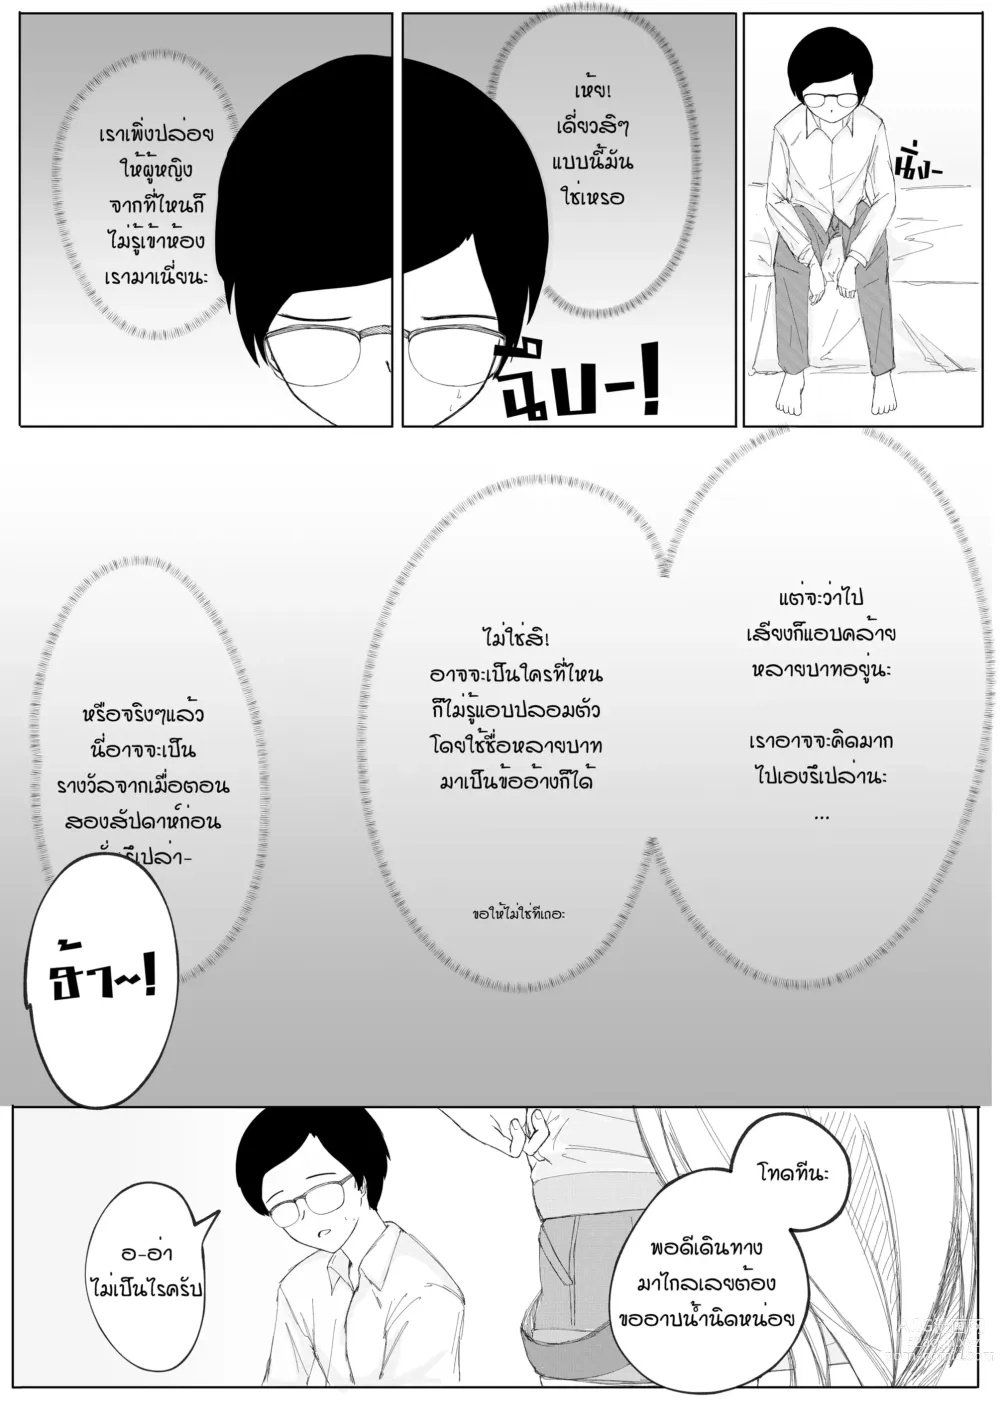 Page 6 of doujinshi ห้ามช่วยตัวเอง